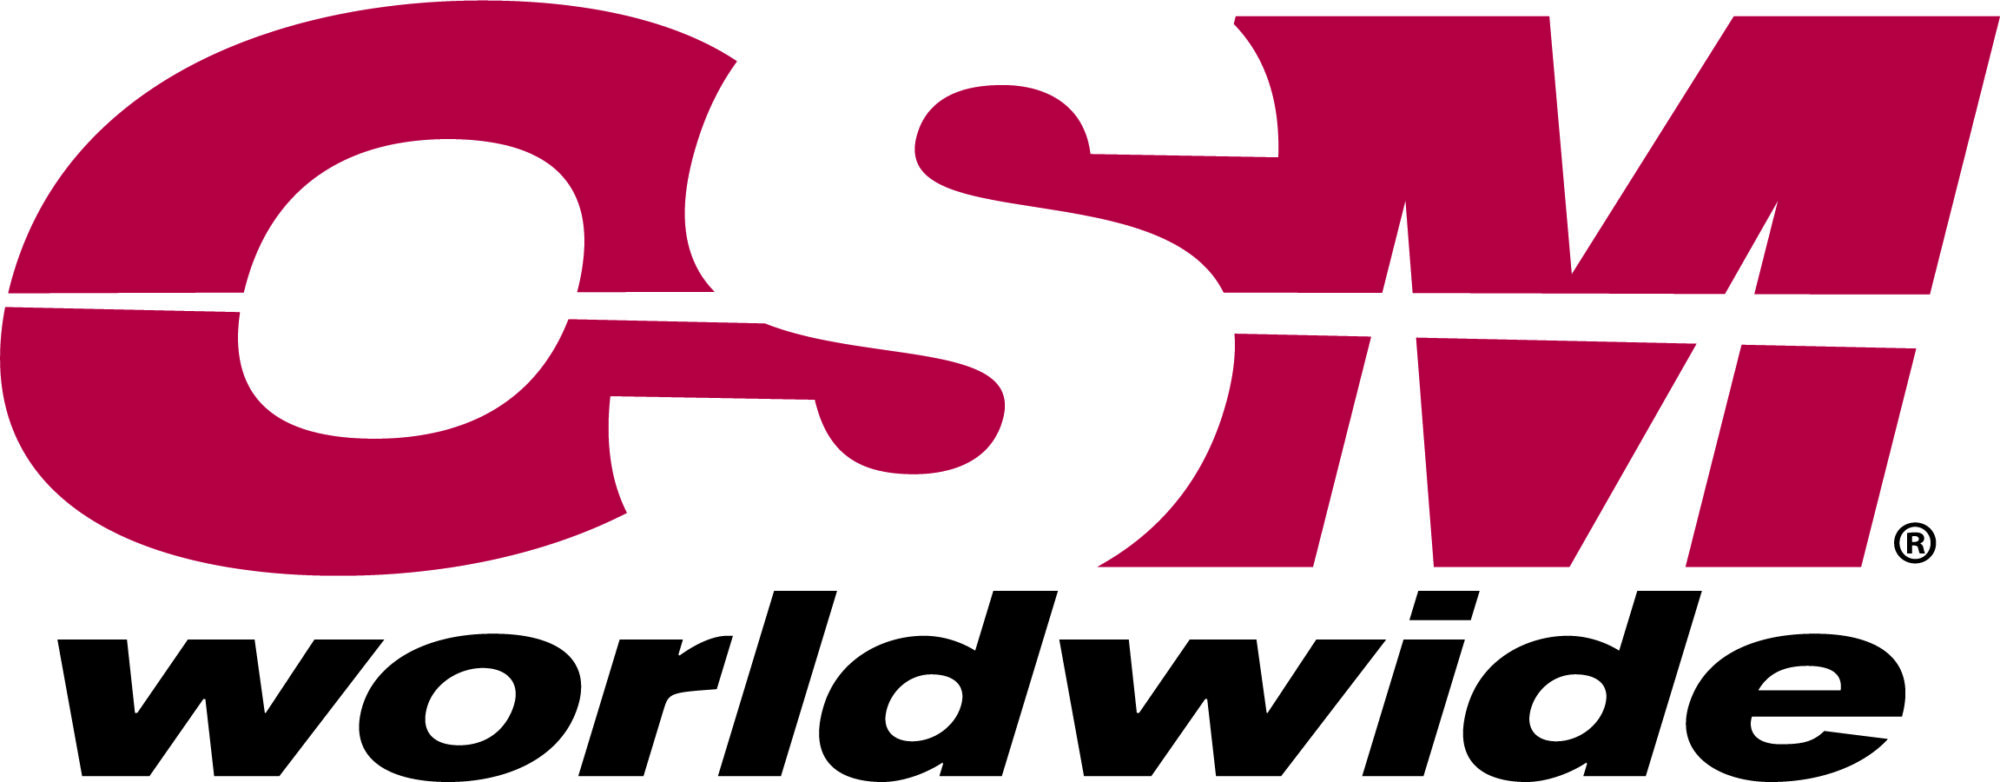 osm worldwide logo